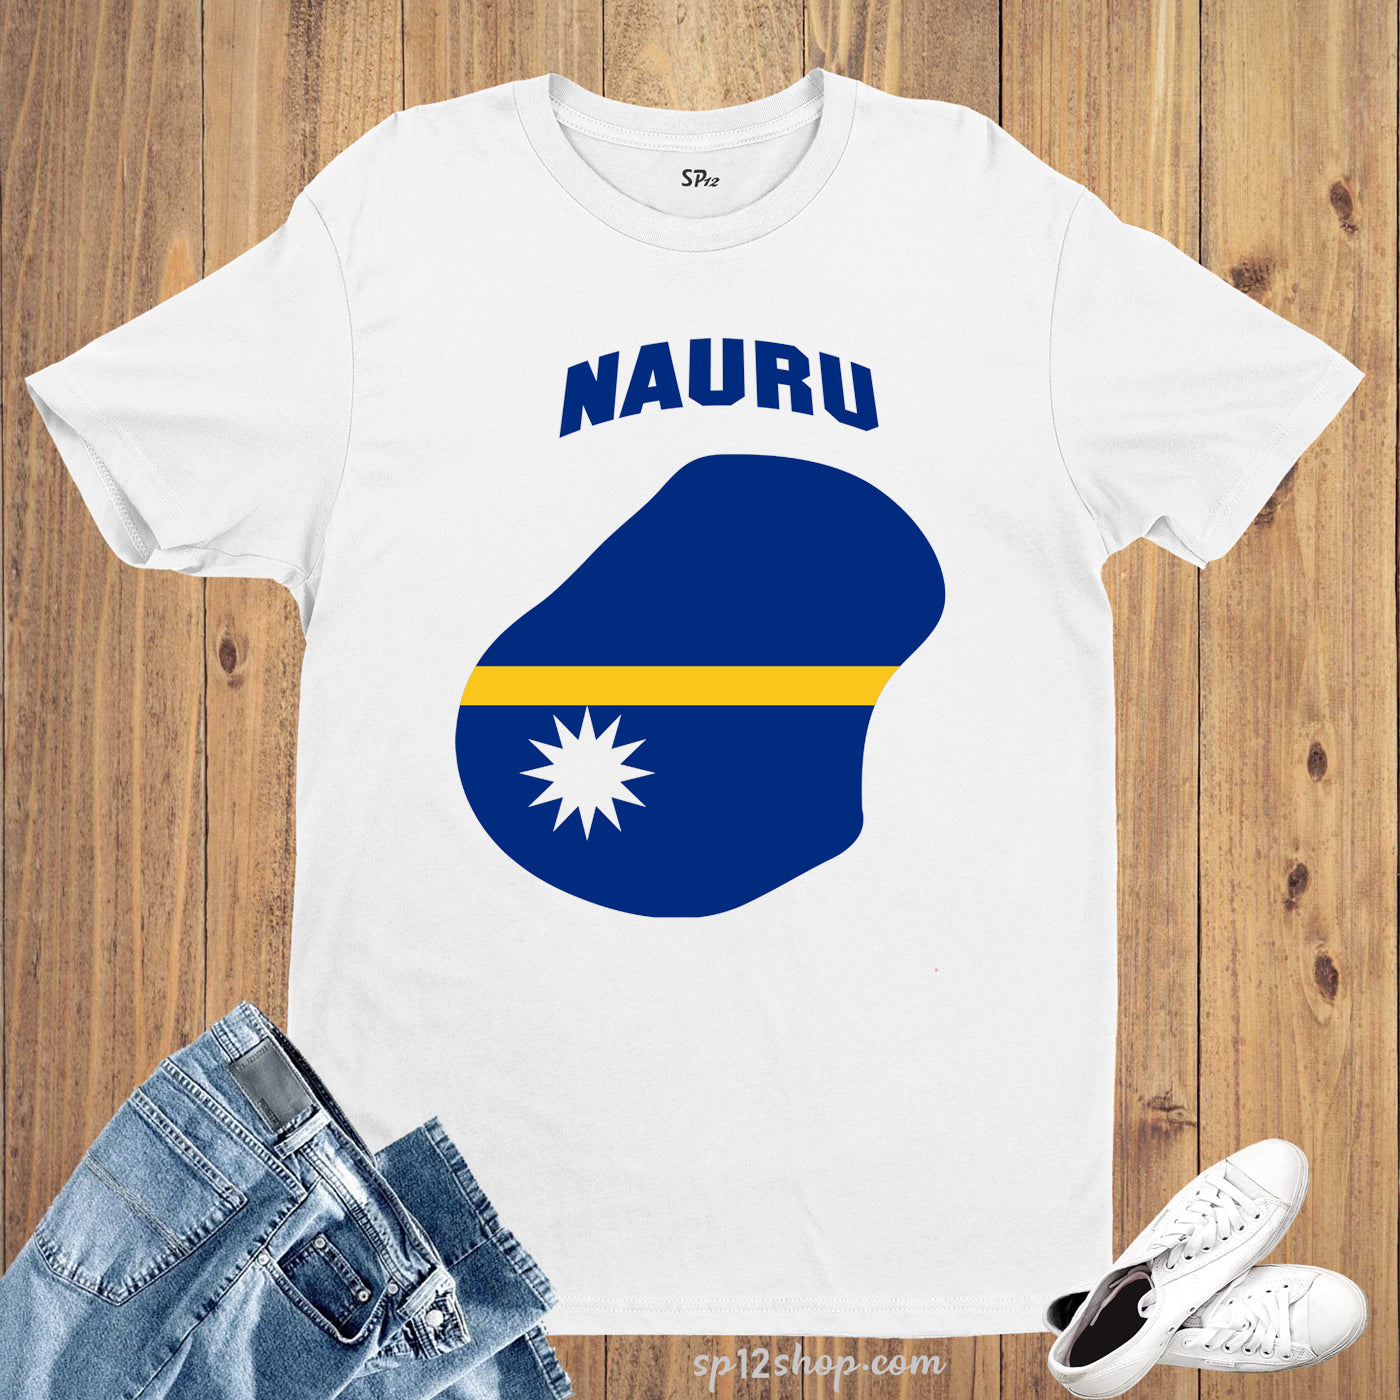 Nauru Flag T Shirt Olympics FIFA World Cup Country Flag Tee Shirt